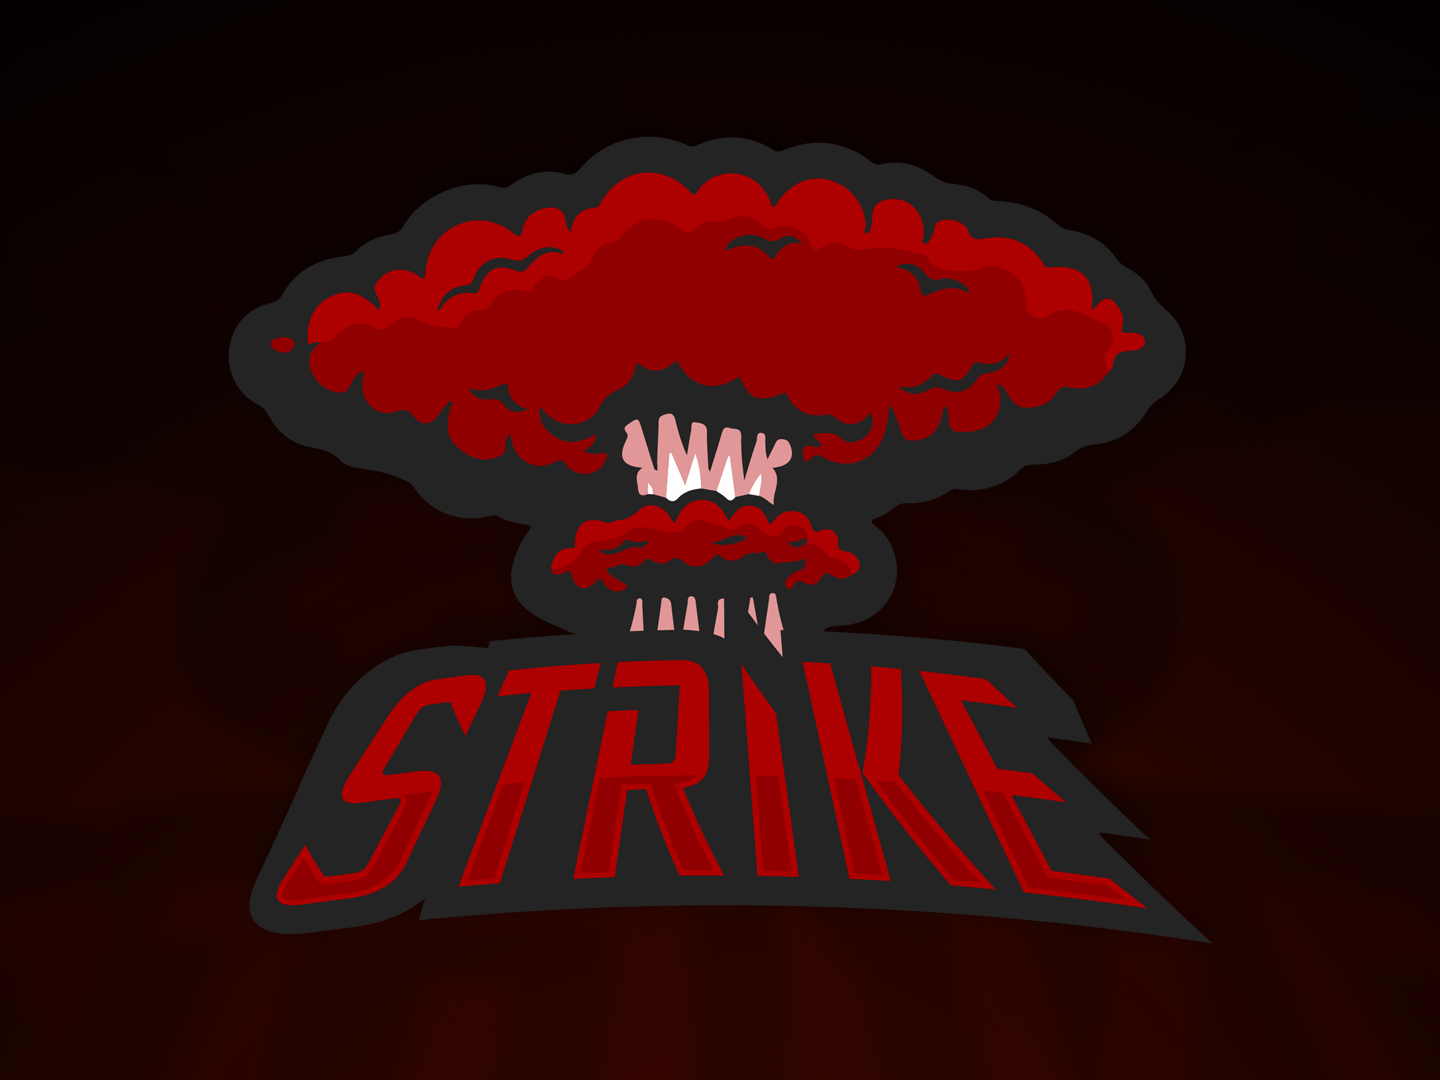 Strike Logo - Esports logo - Strike by Maxim Reulliaux on Dribbble